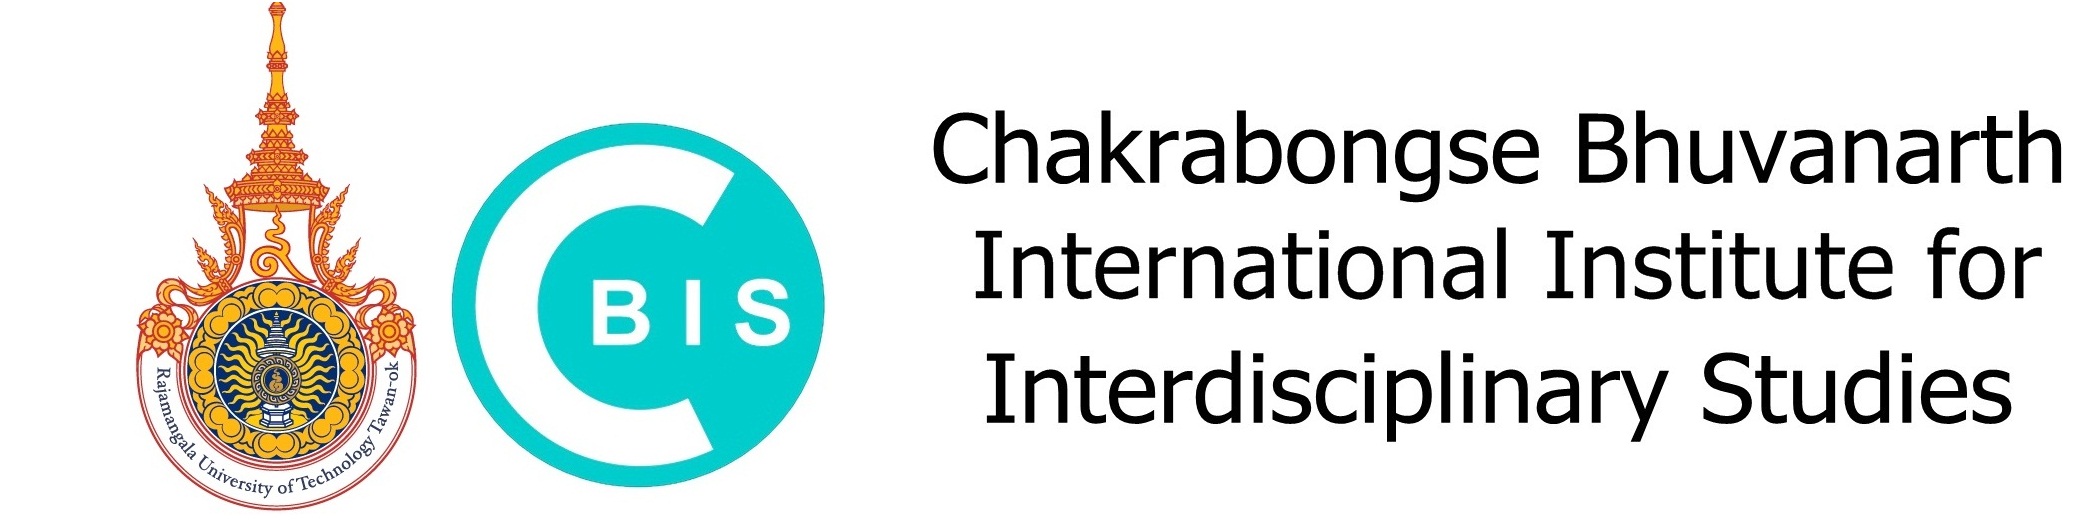 Chakrabongse Bhuvanarth International Institute for Interdisciplinary Studies (CBIS)